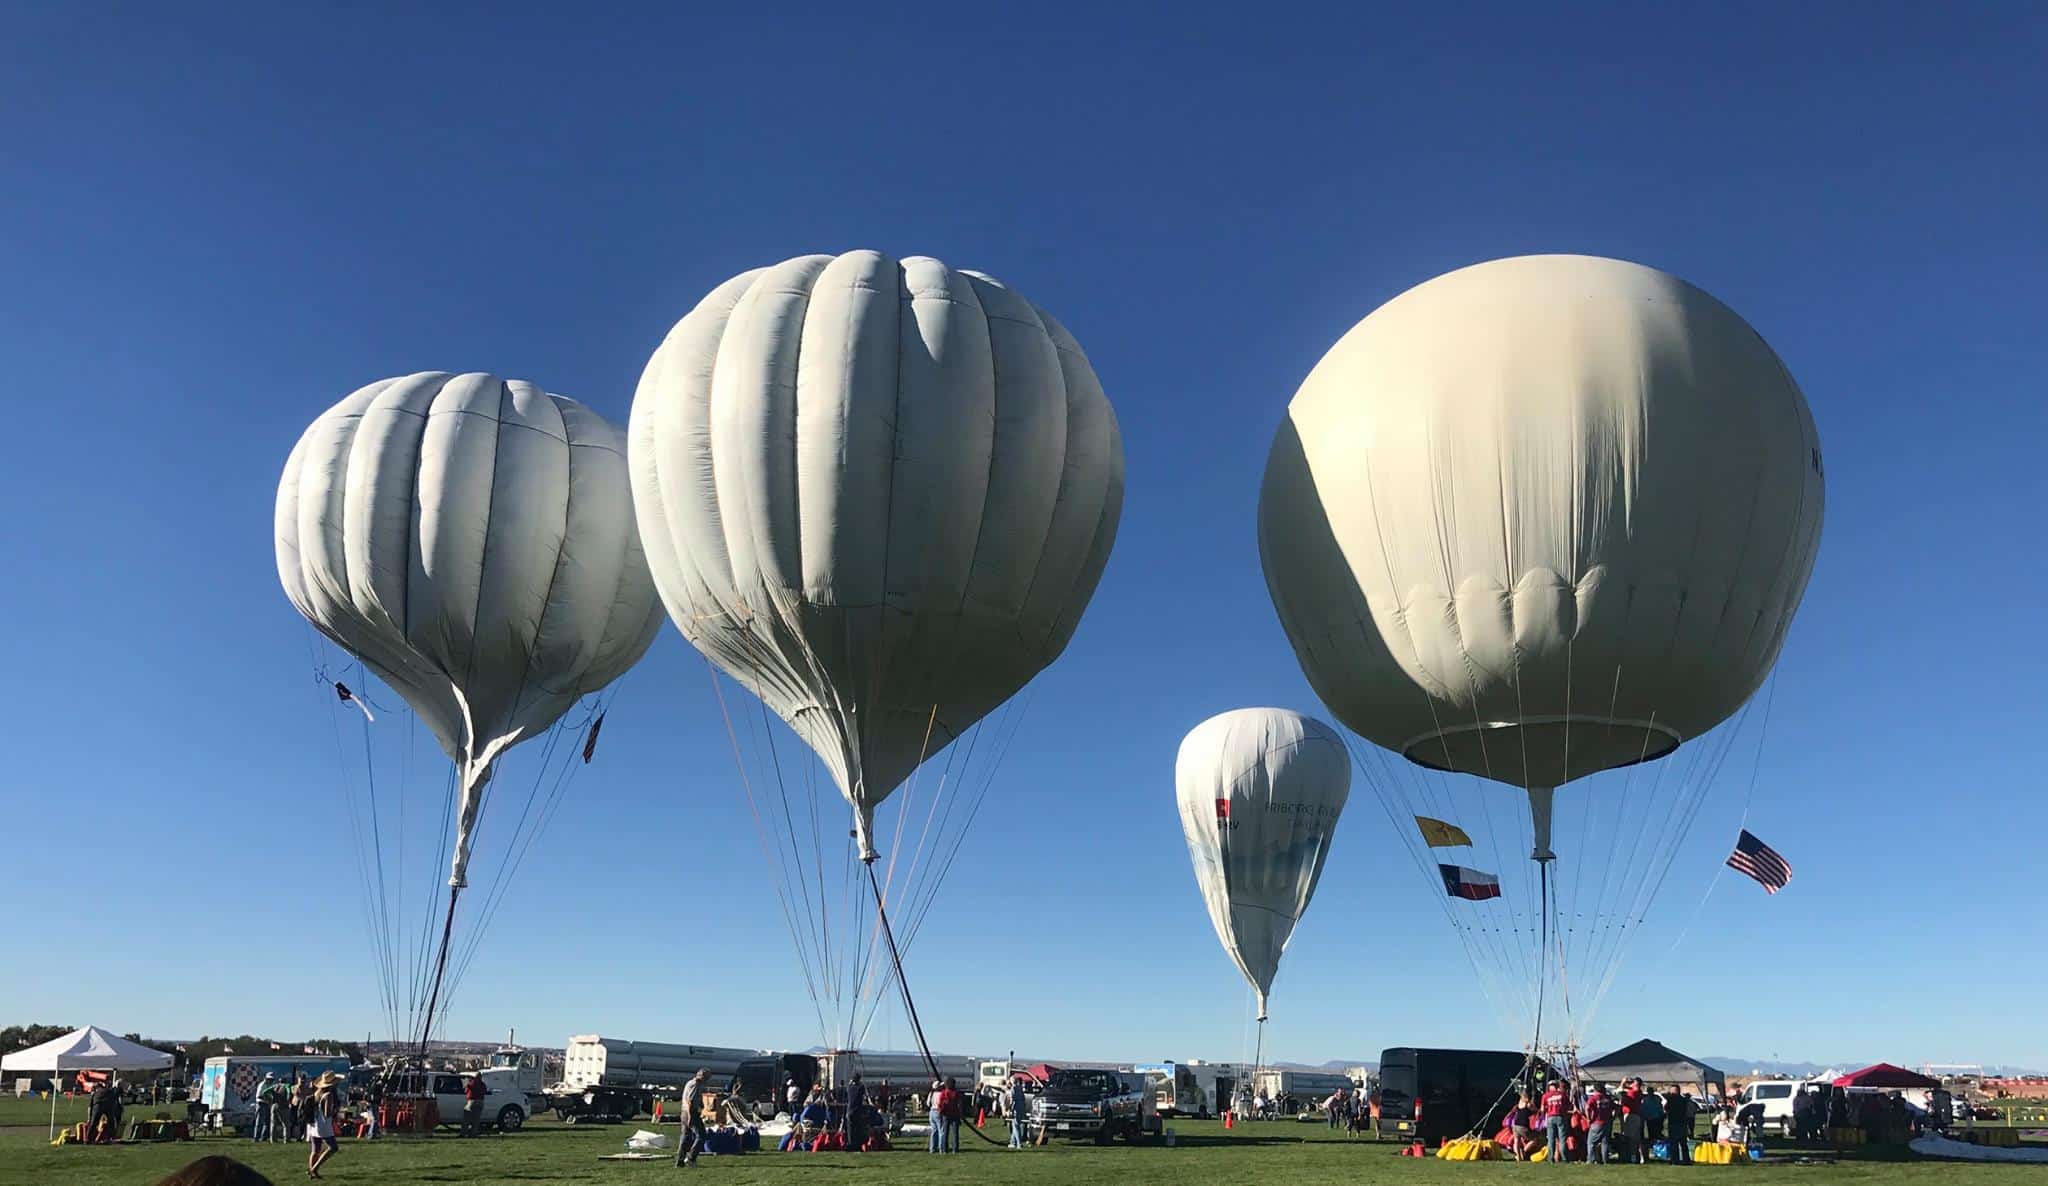 Gas Hot Air Balloons in America's Challenge at The Albuquerque International Balloon Fiesta